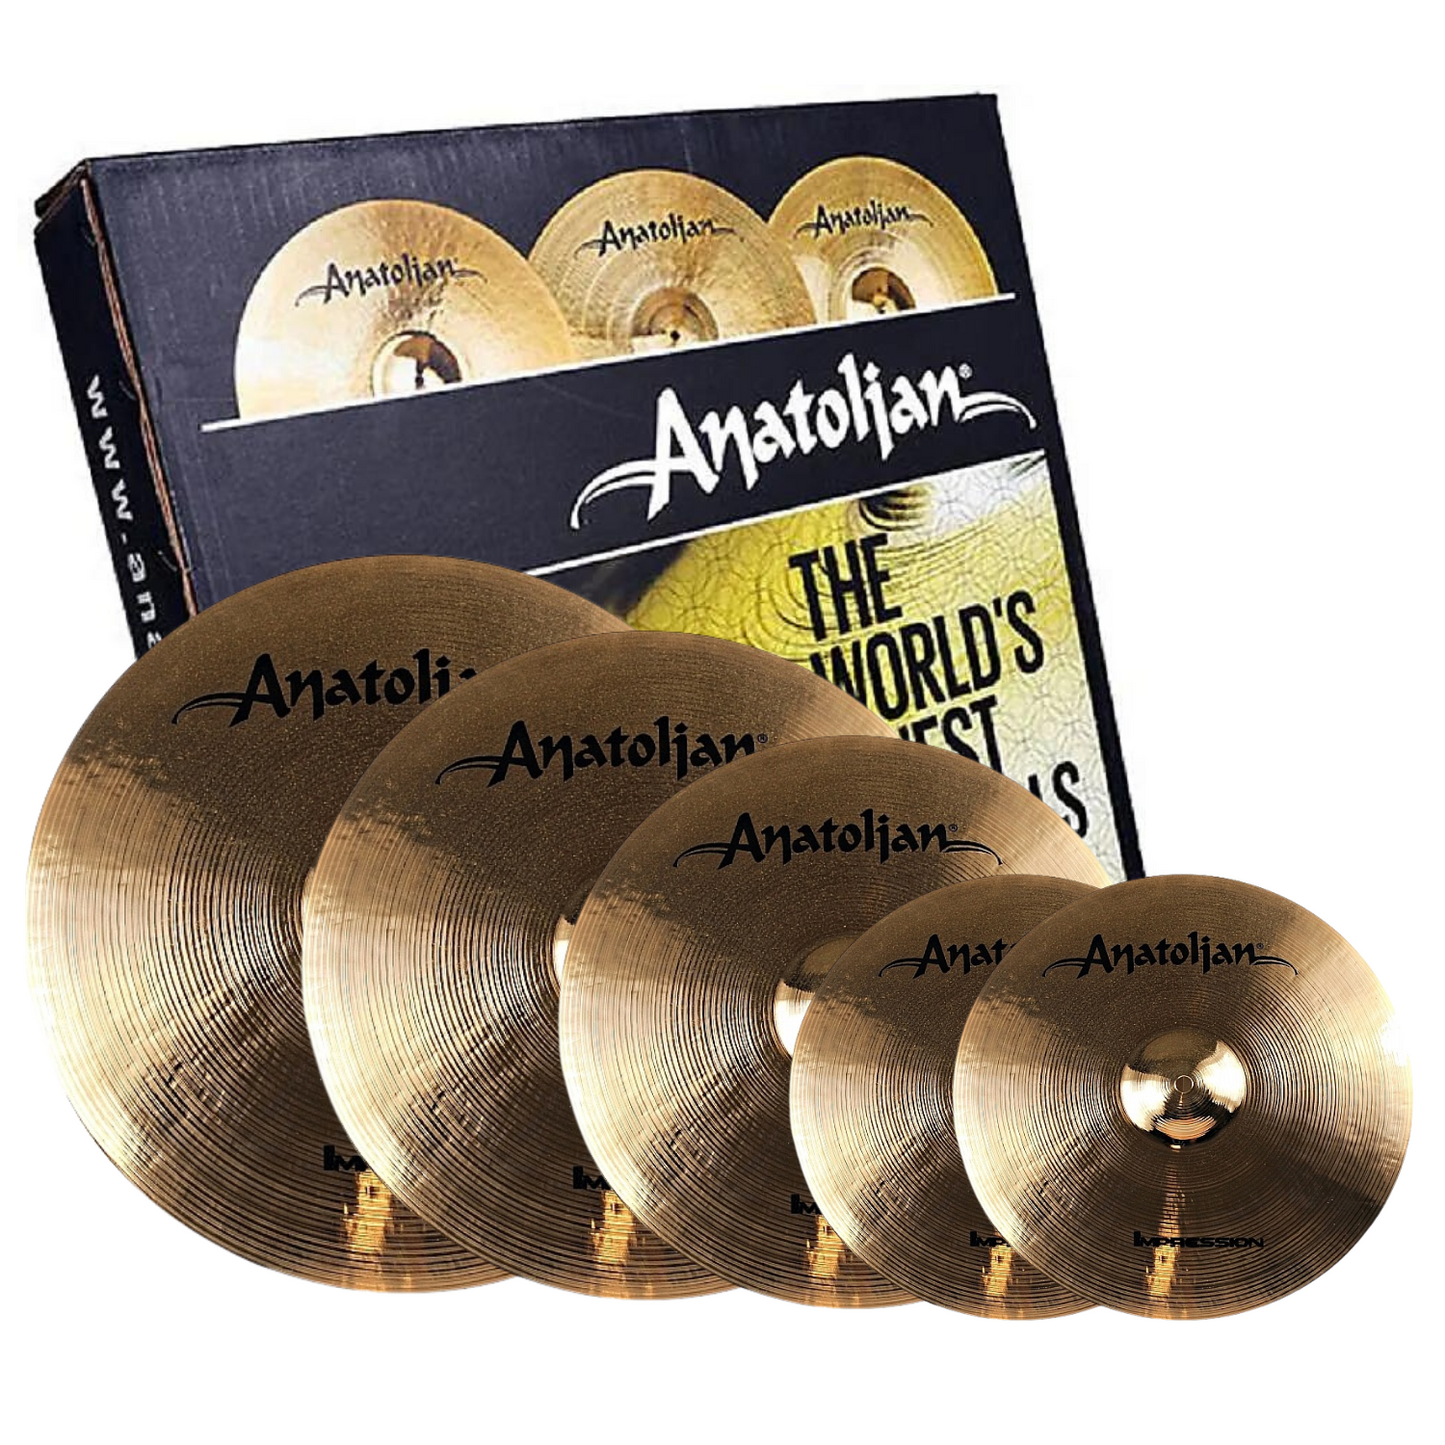 Anatolian Cymbals Pack - 5pc Impression Series (14H, 16C, 18C, 20R)